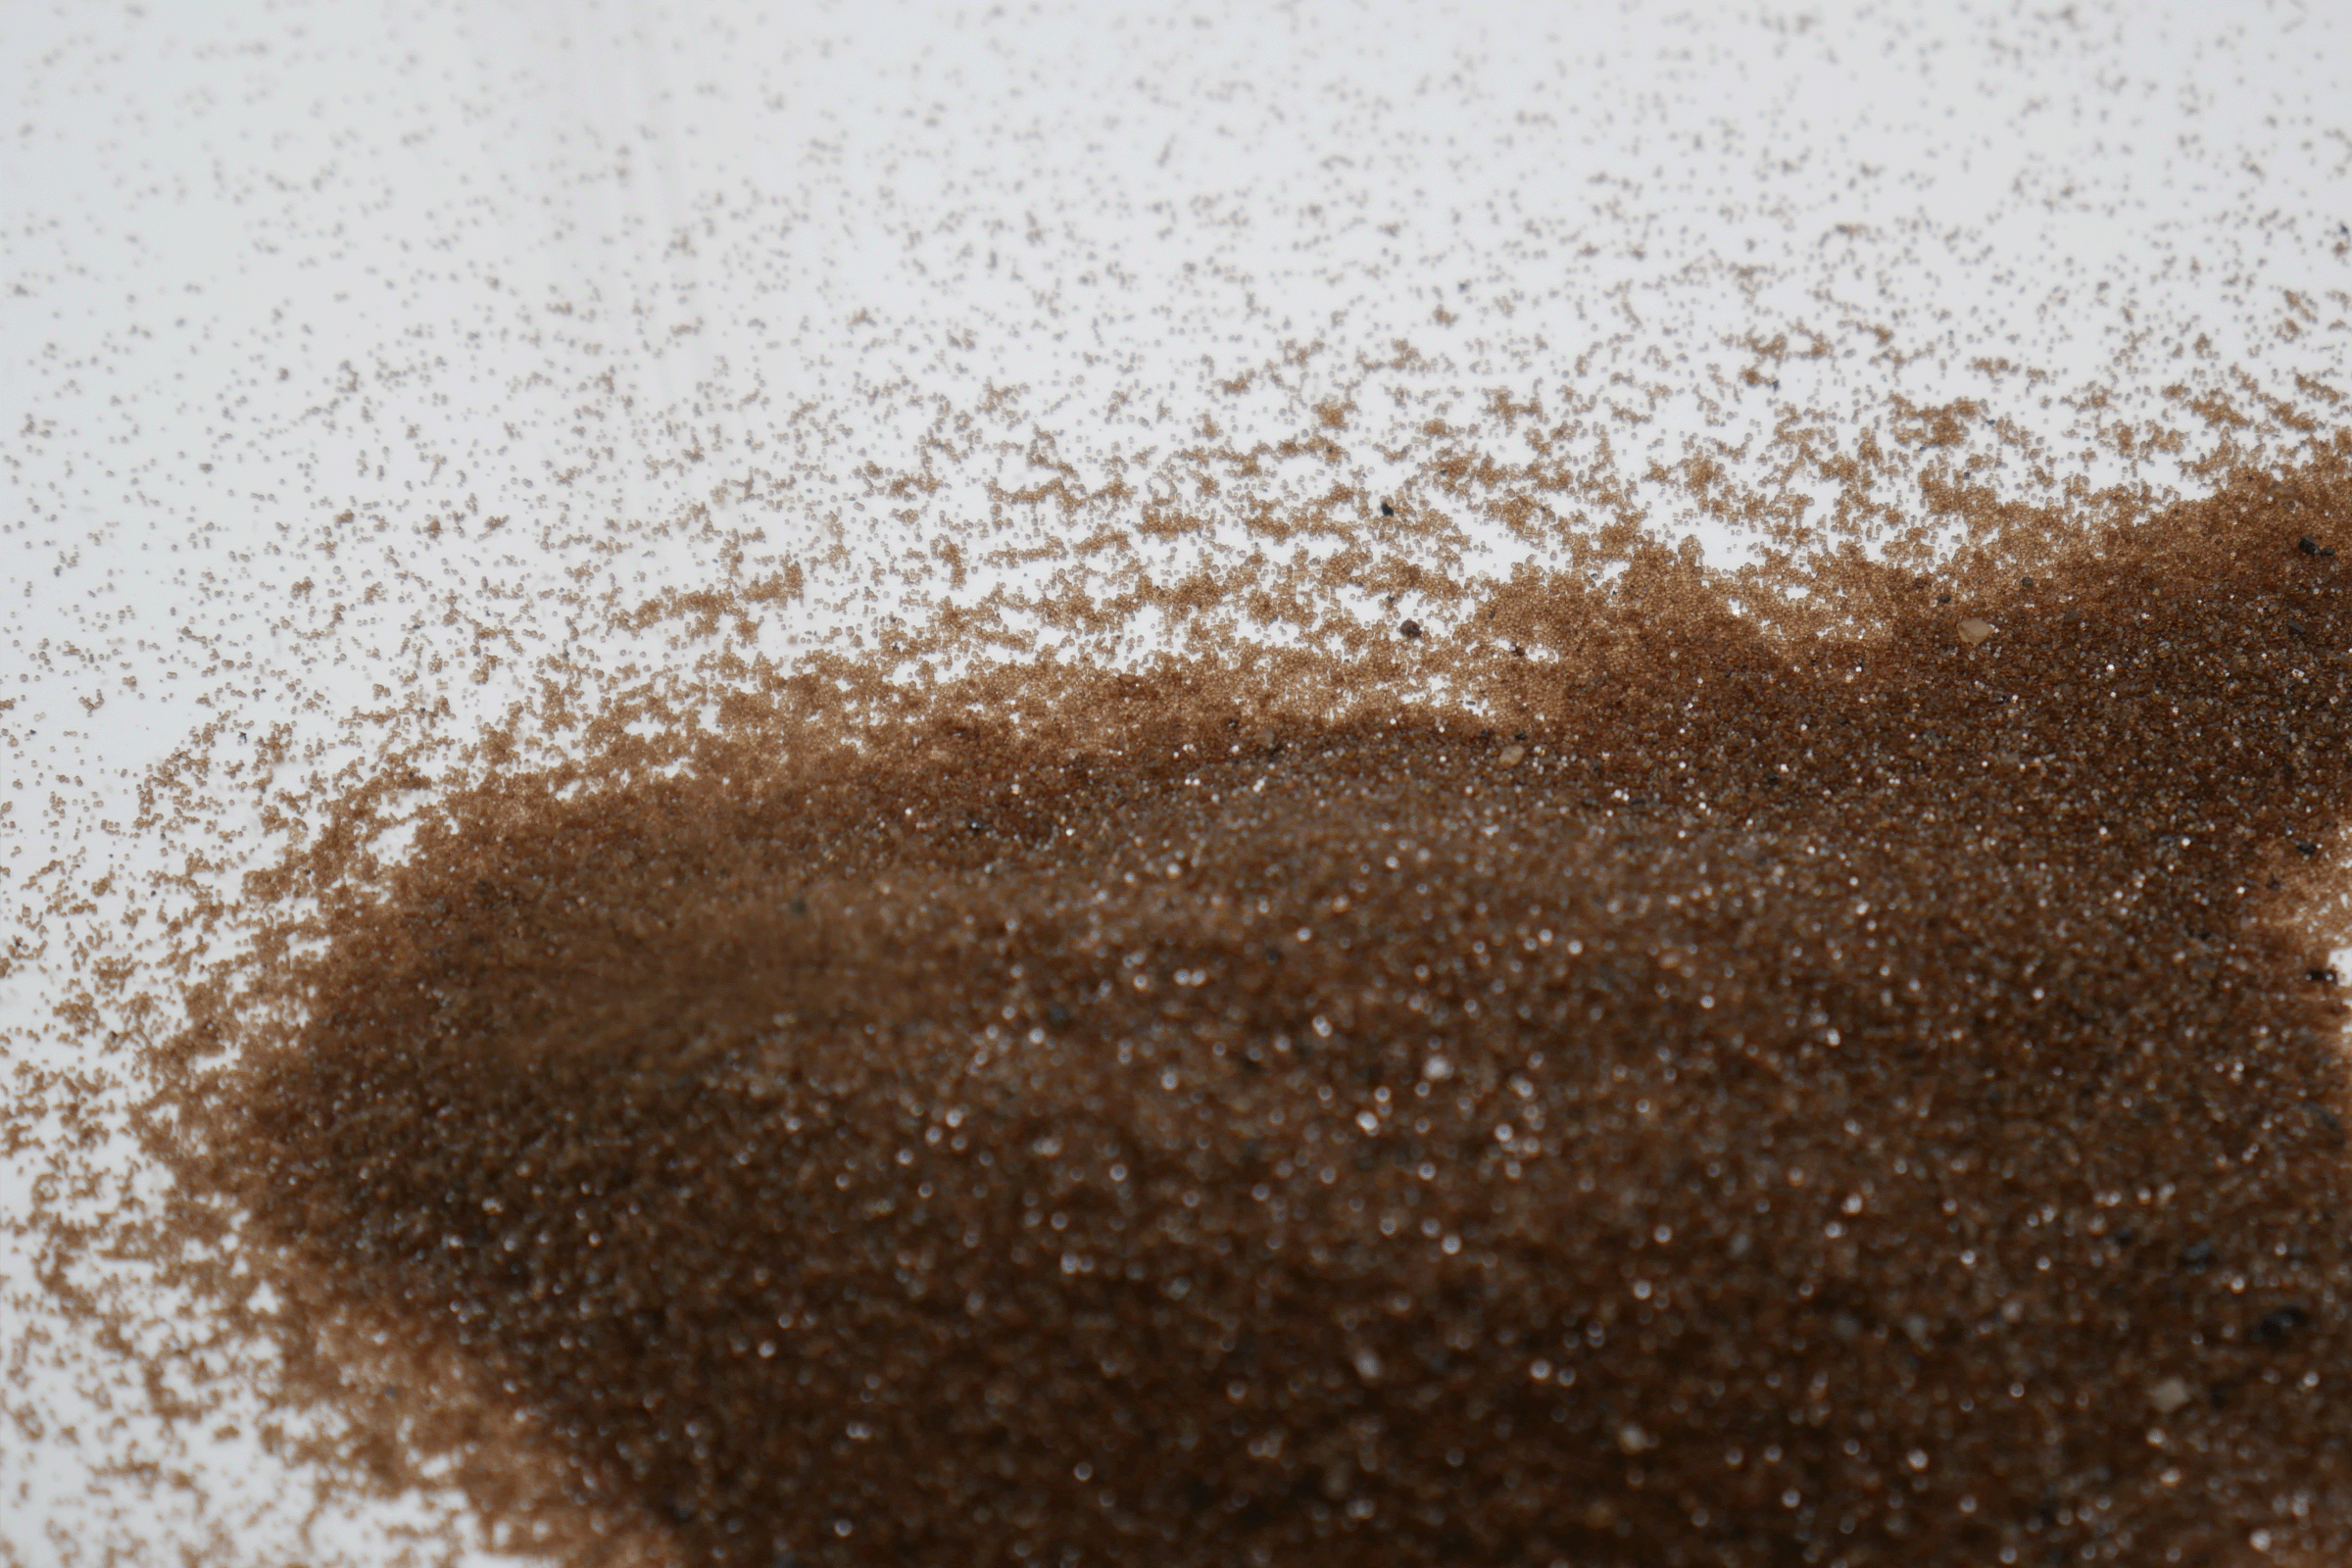 Alderwood Smoked Salt